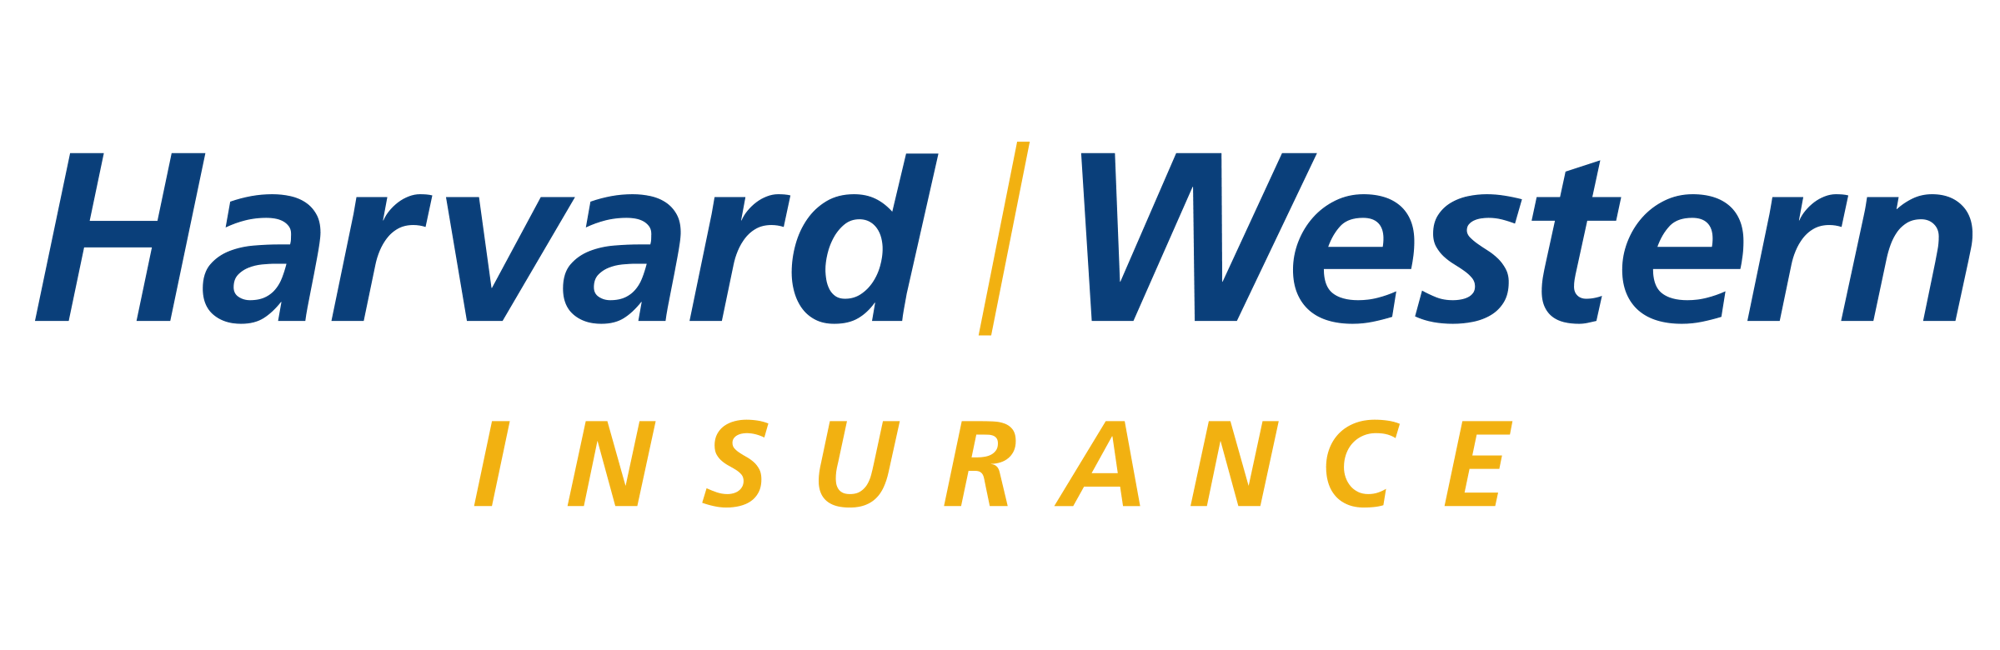 Harvard Western Insurance-1